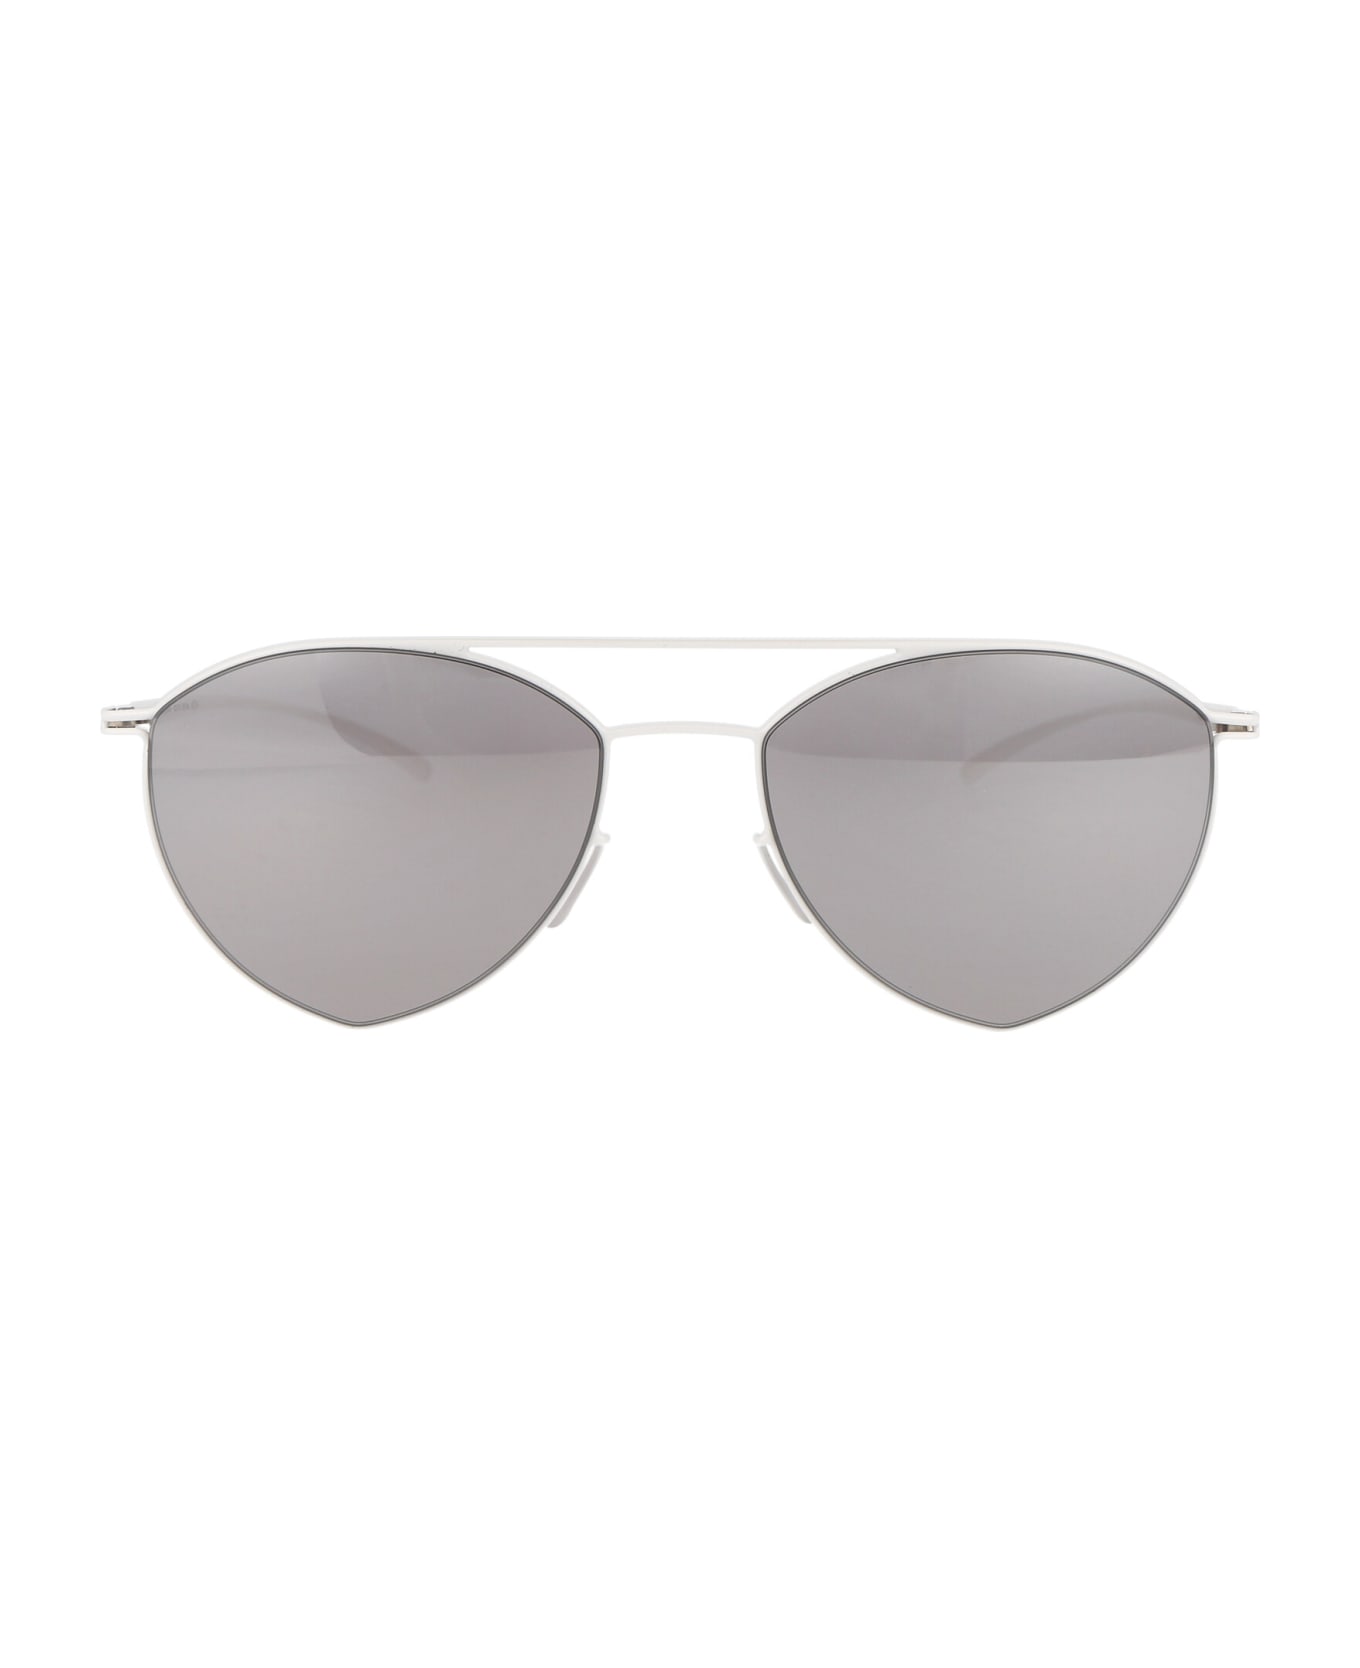 Mykita Mmesse010 Sunglasses - 333 E13 White Warm Grey Flash